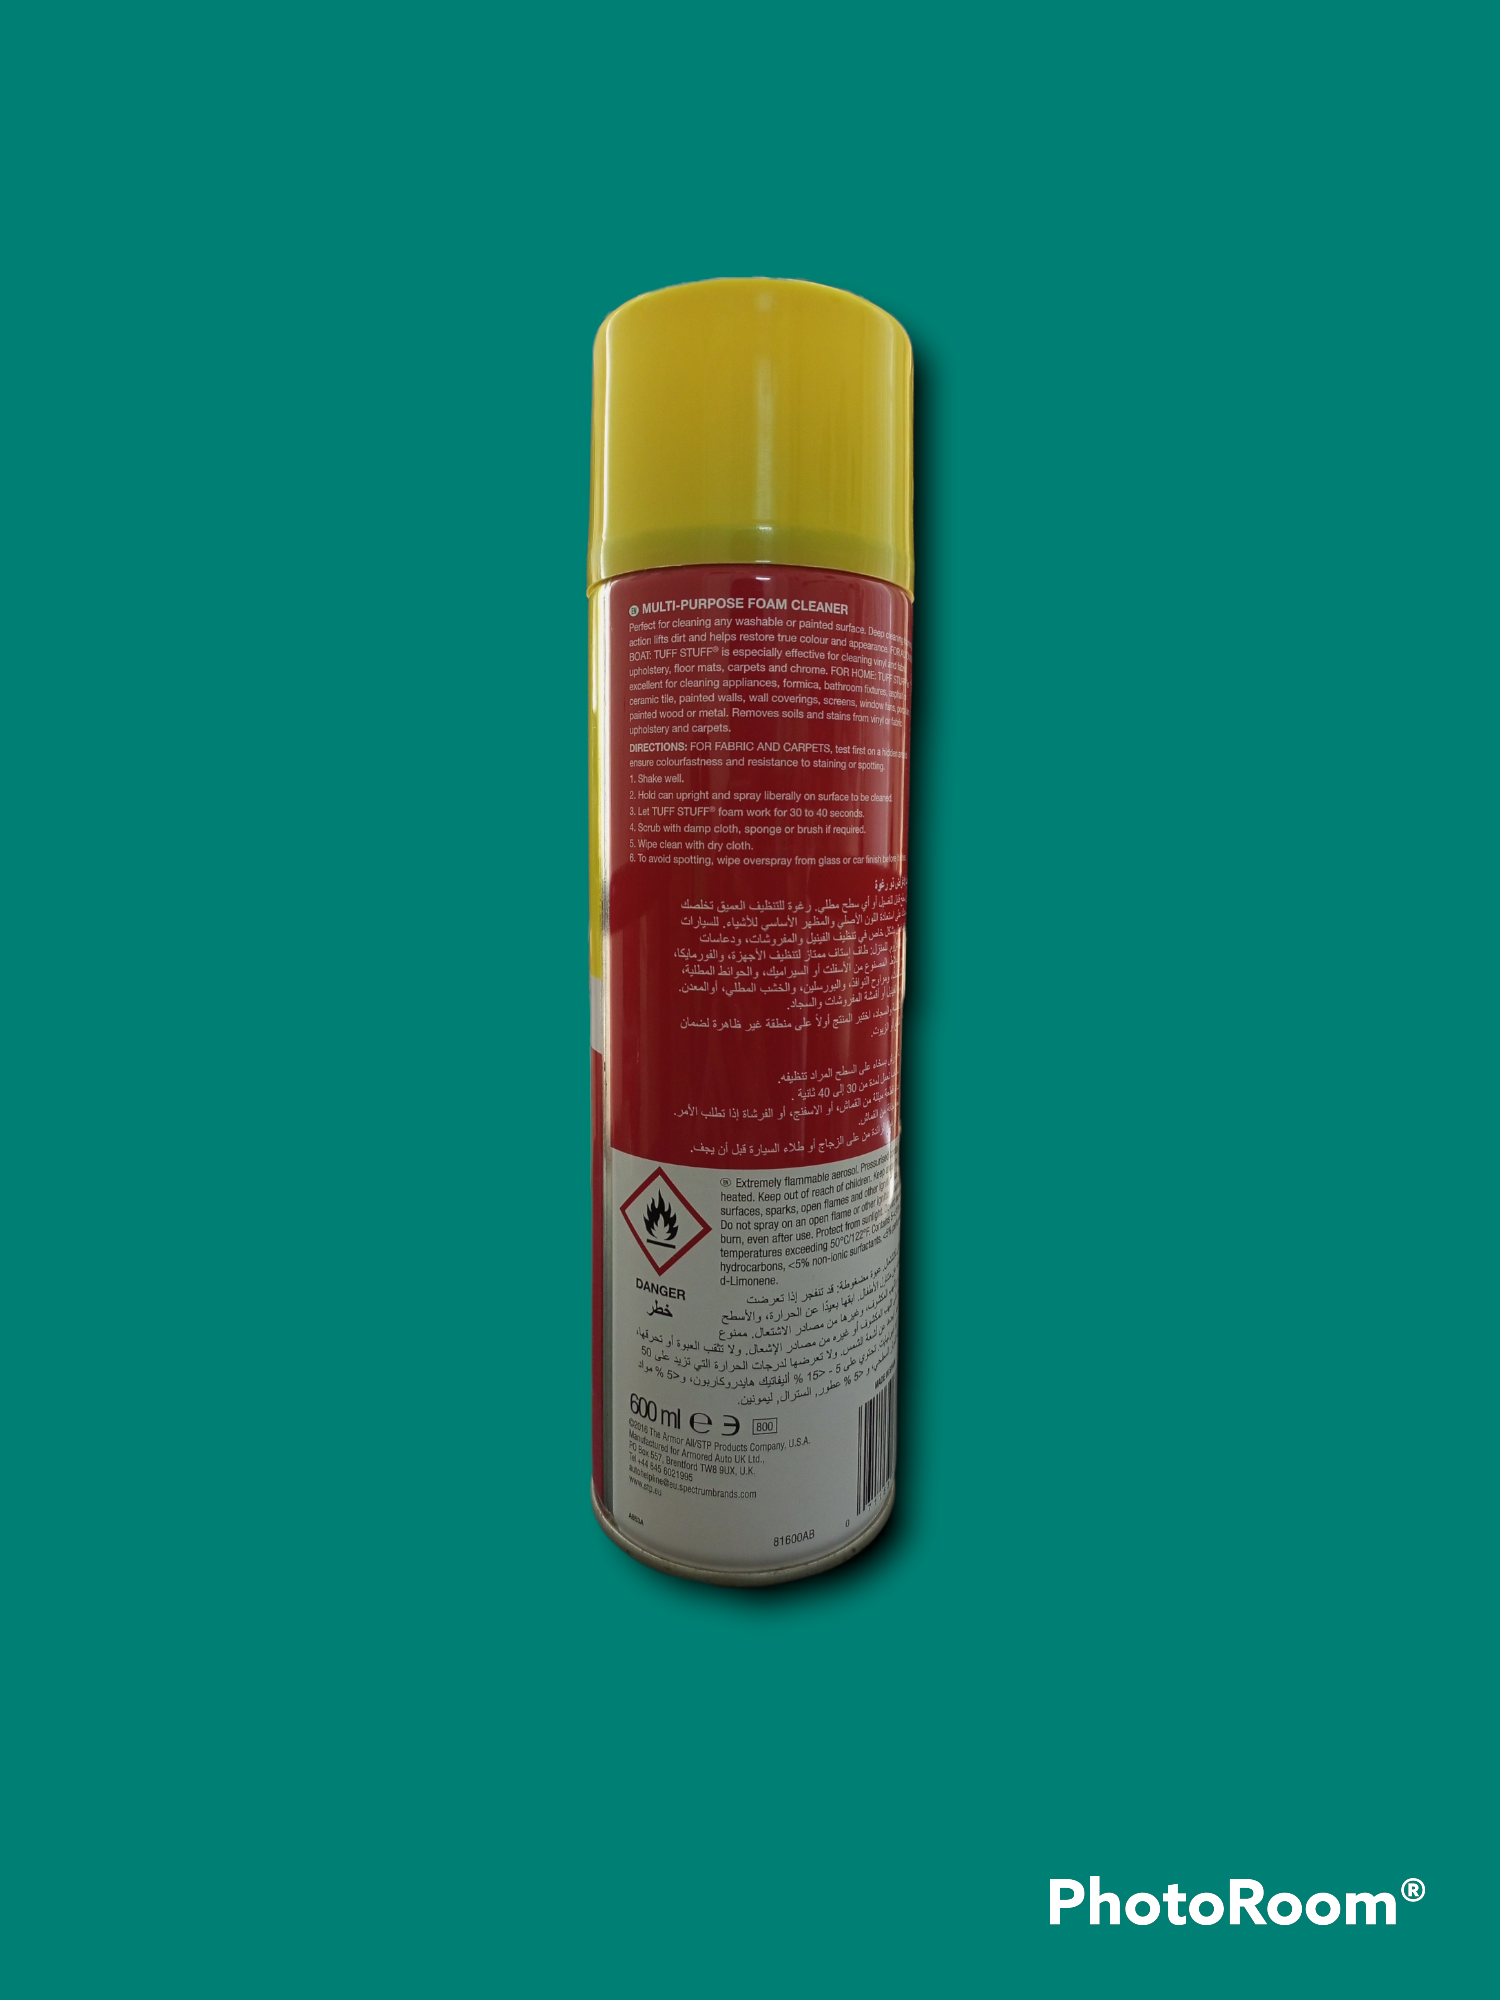 STP Tuff Stuff Multi-Purpose Fabric Foam Cleaner Deep Cleaning  (Fabric/Carpet/Vinyl) 600ML